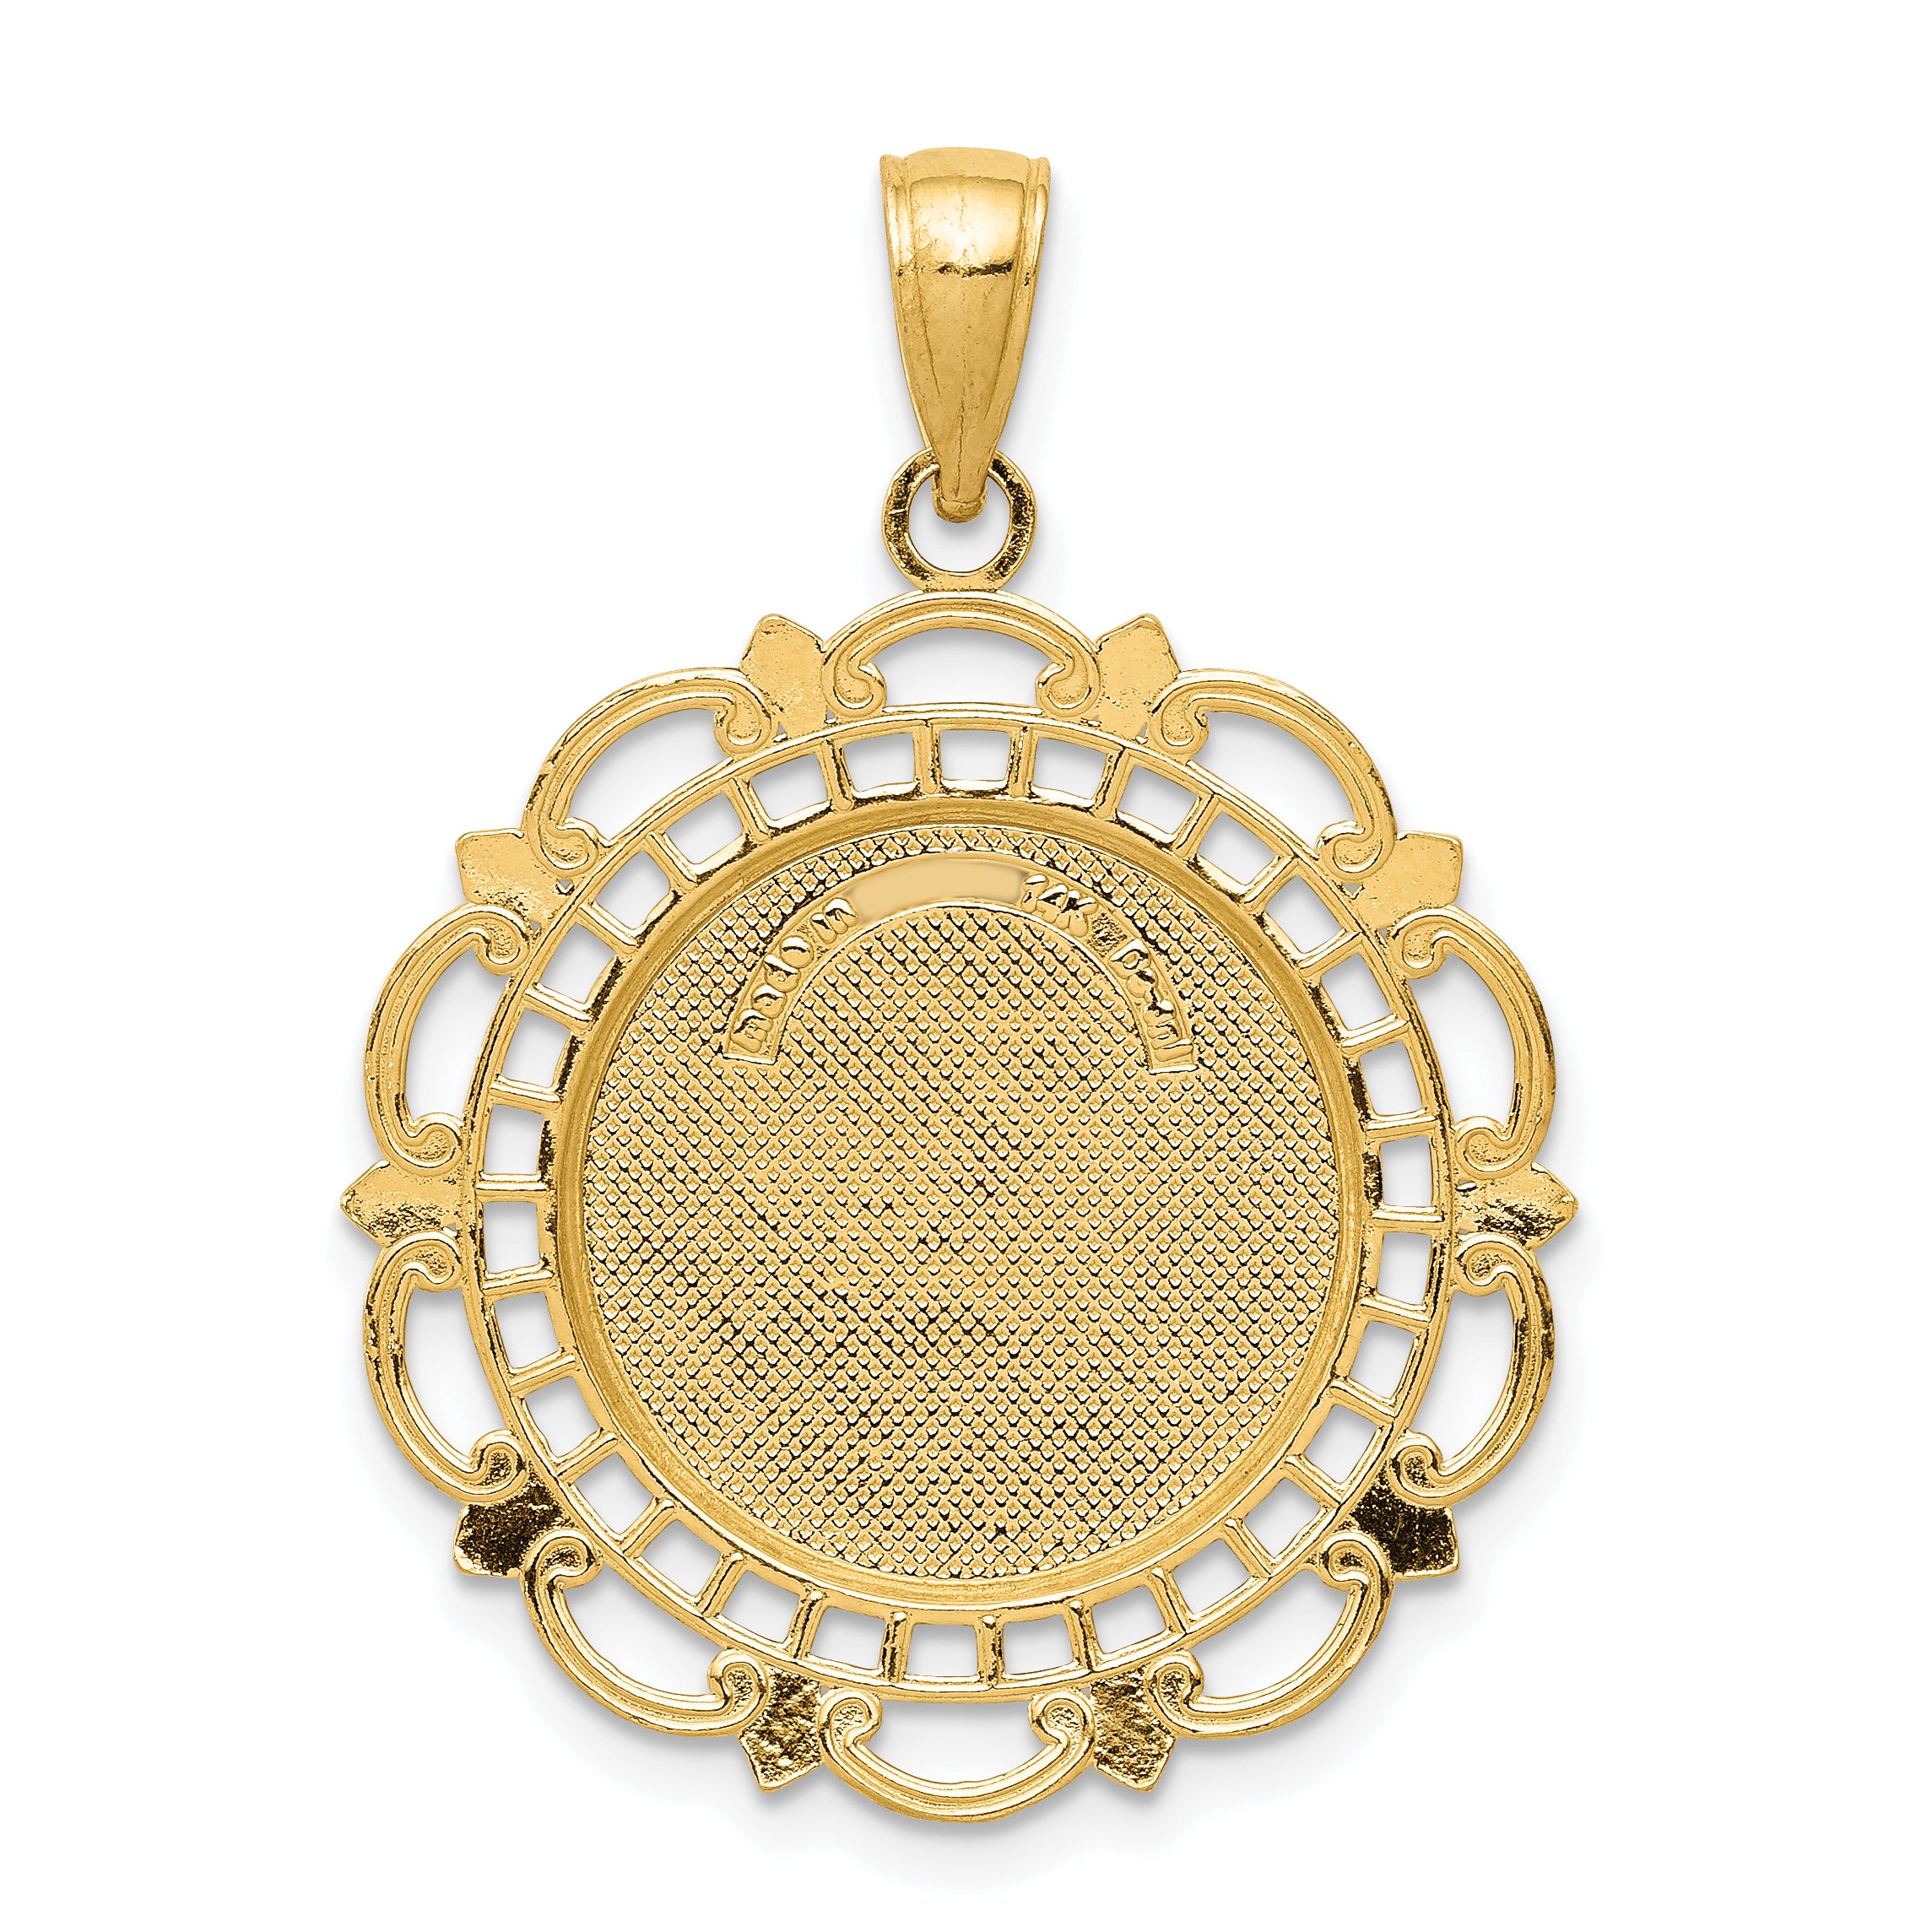 14K Gold Polished / Satin Saint Michael Medal Pendant